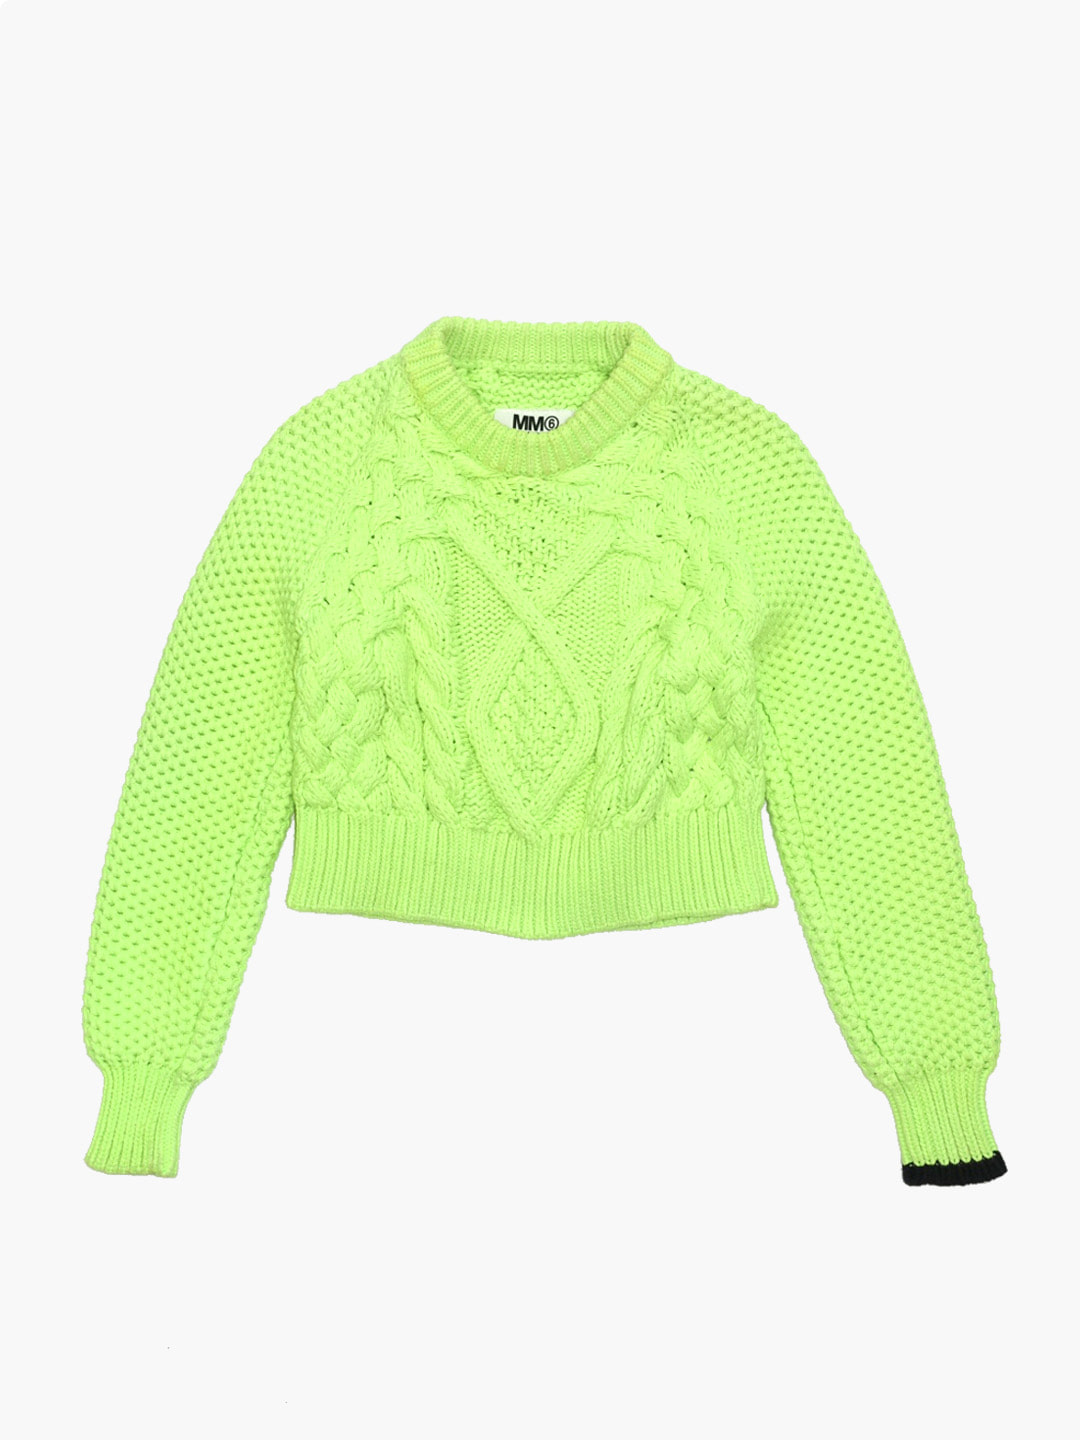 MM6 MAISON MARGIELAHeavy lime sweater